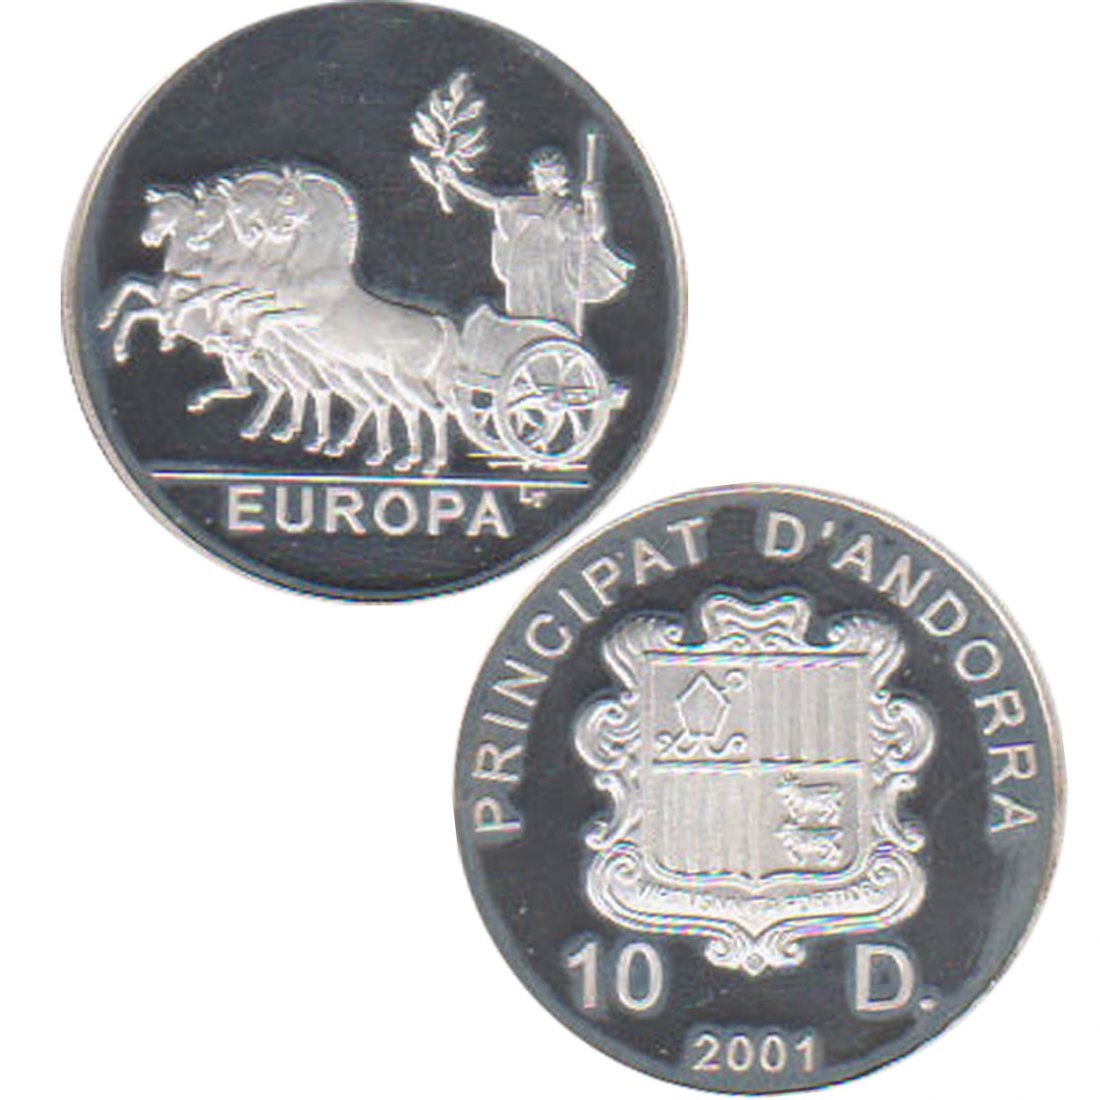  Andorra 10 Diners Silbermünze *Andorra in Europa - Quadriga* 2001 *PP* max 15.000St!   